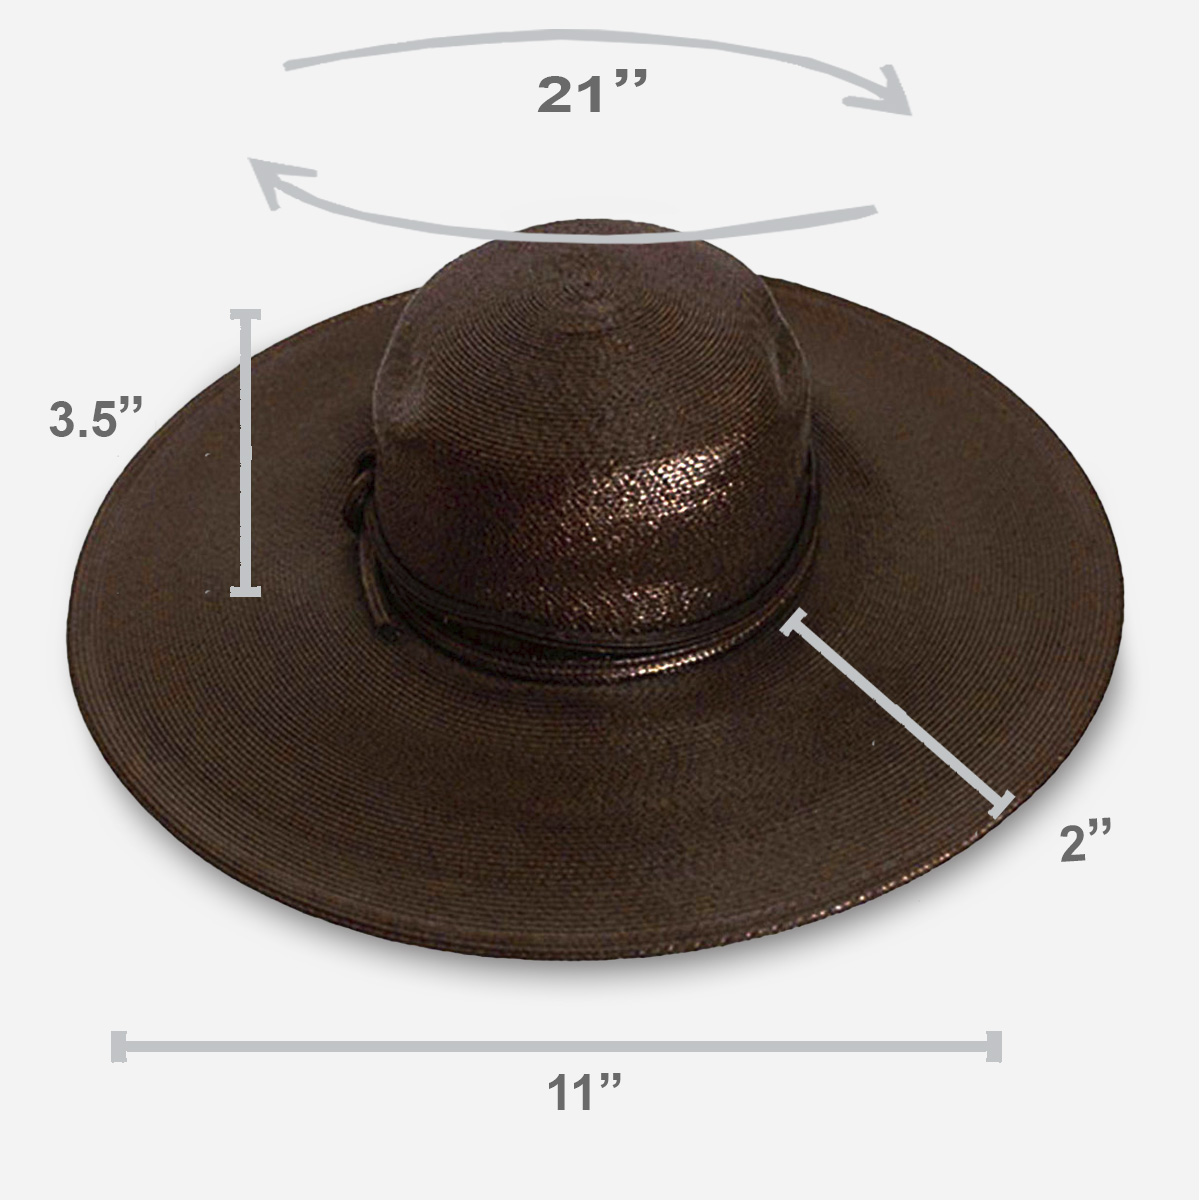 1970s wide brim hat size